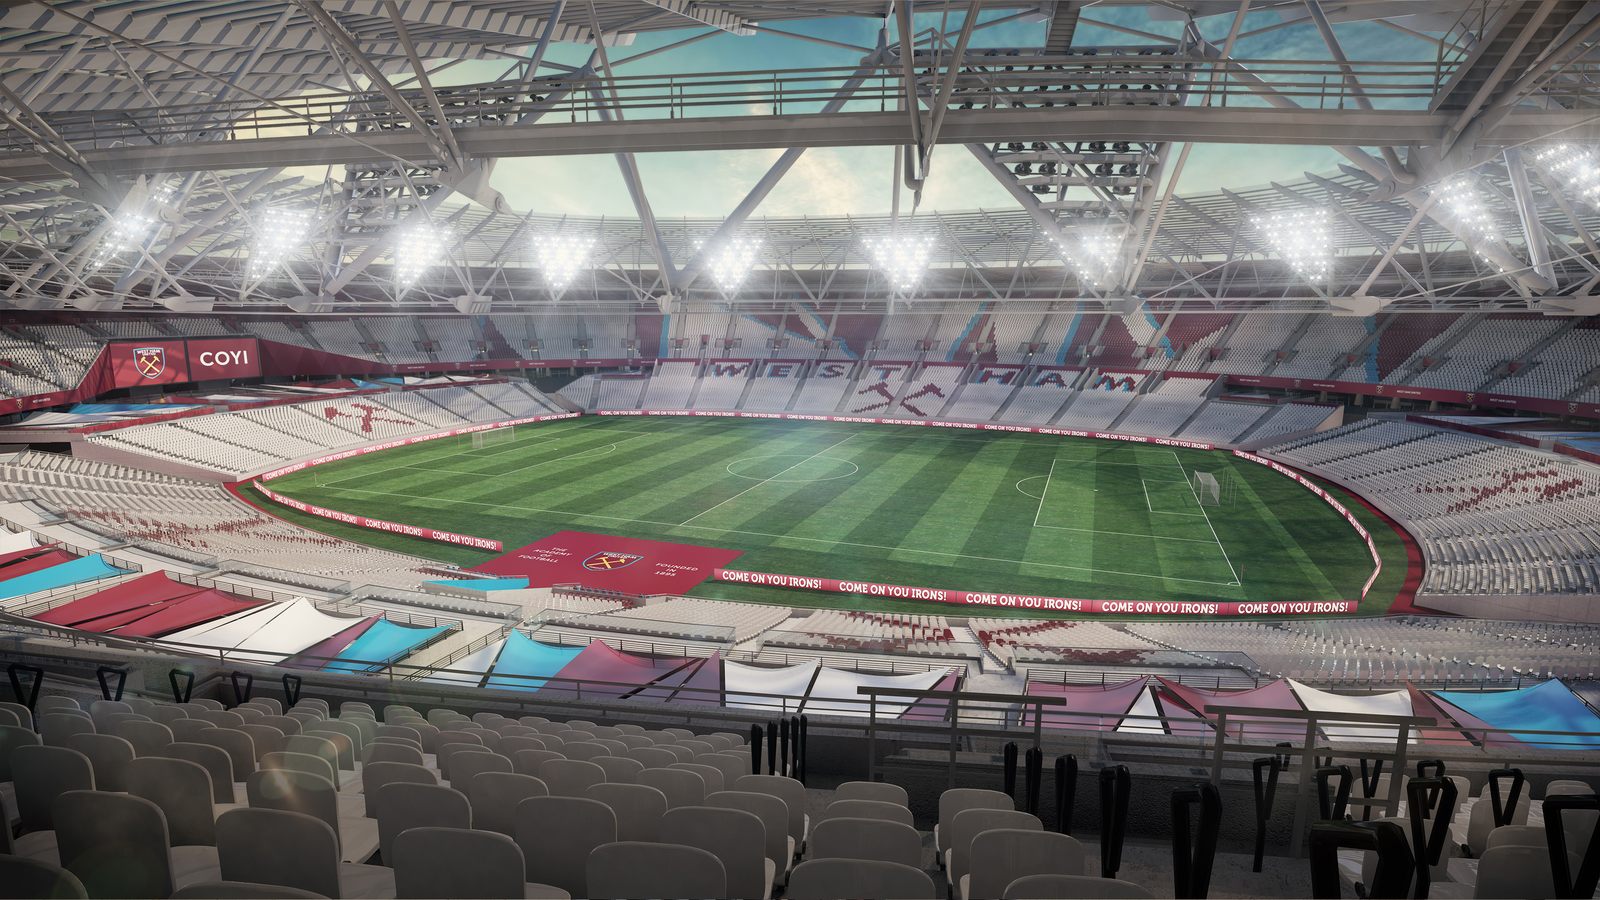 Design: London Olympic Stadium